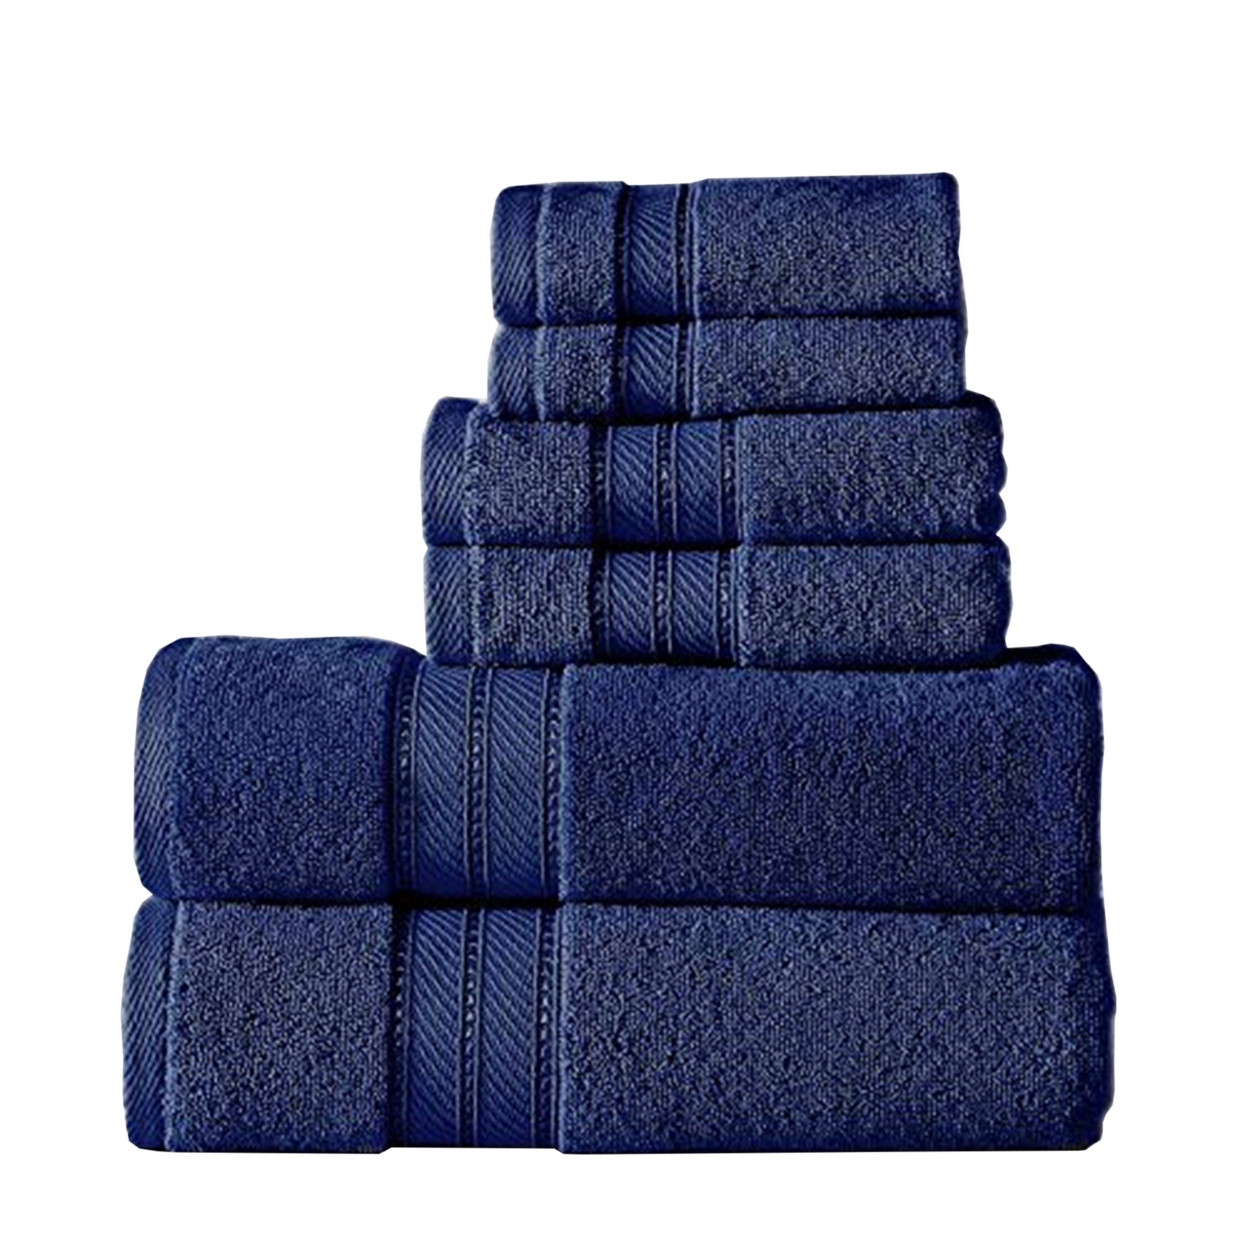 Bergamo 6 Piece Spun Loft Towel Set With Twill Weaving The Urban Port, Dark Blue- Saltoro Sherpi